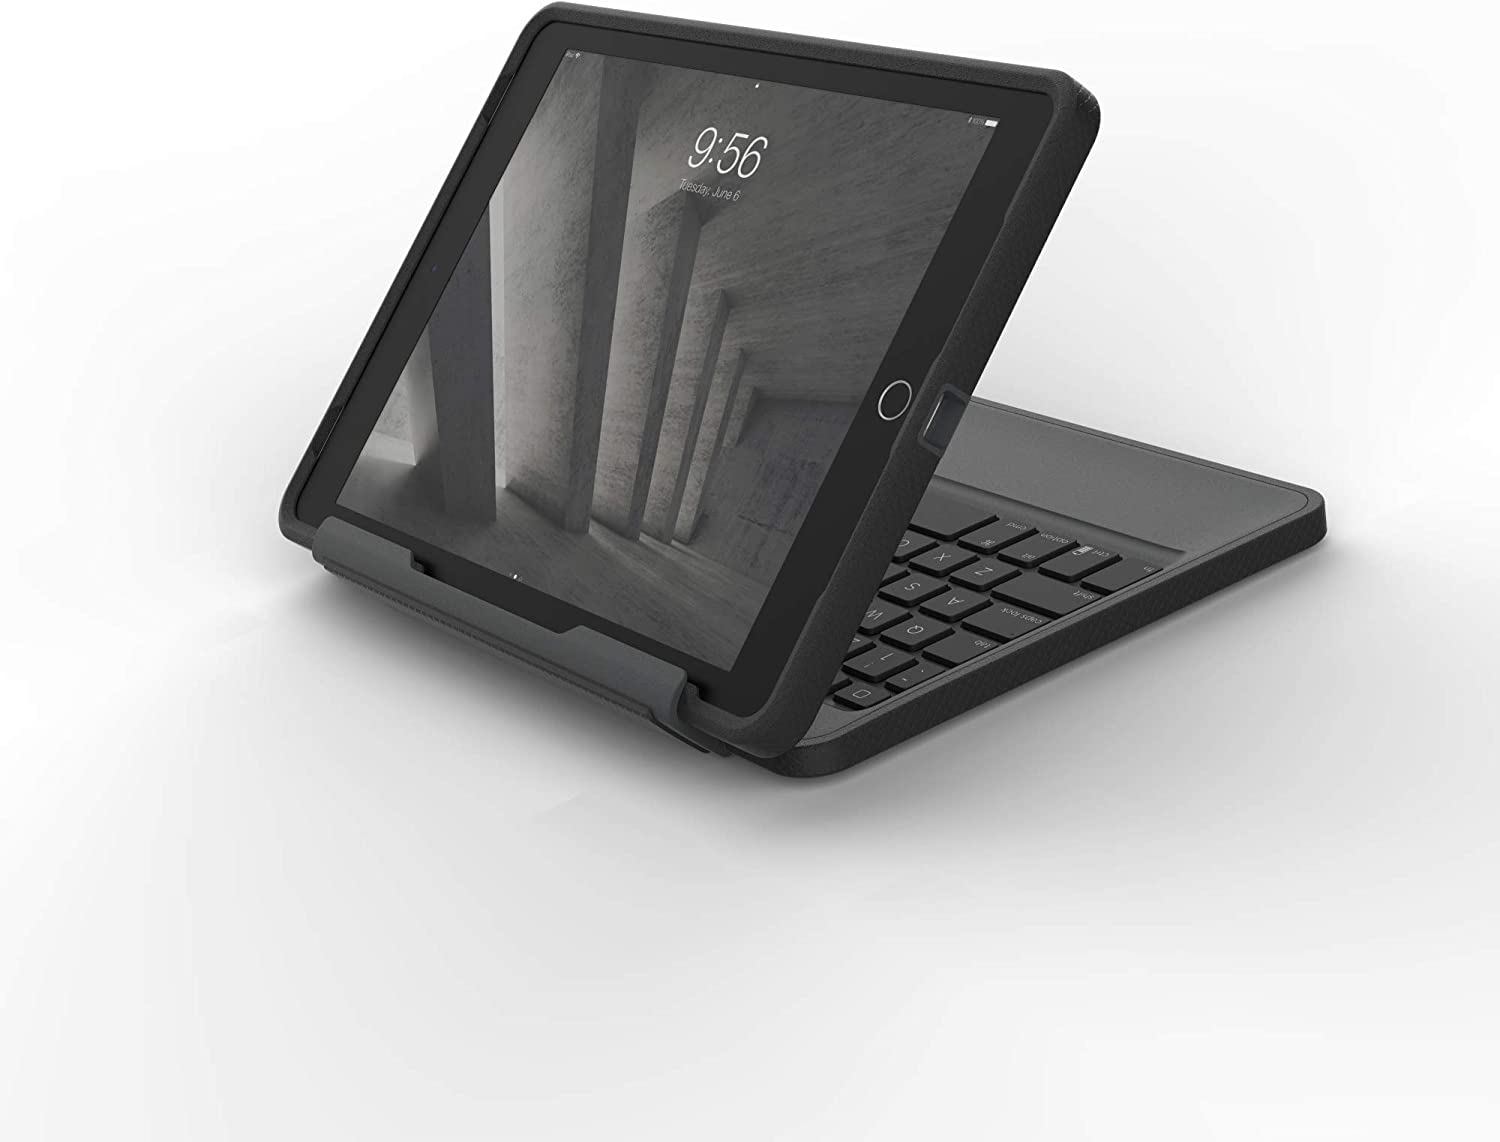 ZAGG - A97RGK-BB0 Rugged Book Keyboard Folio Case for Apple® iPad 5th Gen, 9.7-Inch iPad® Pro, Air and Air 2 - Black